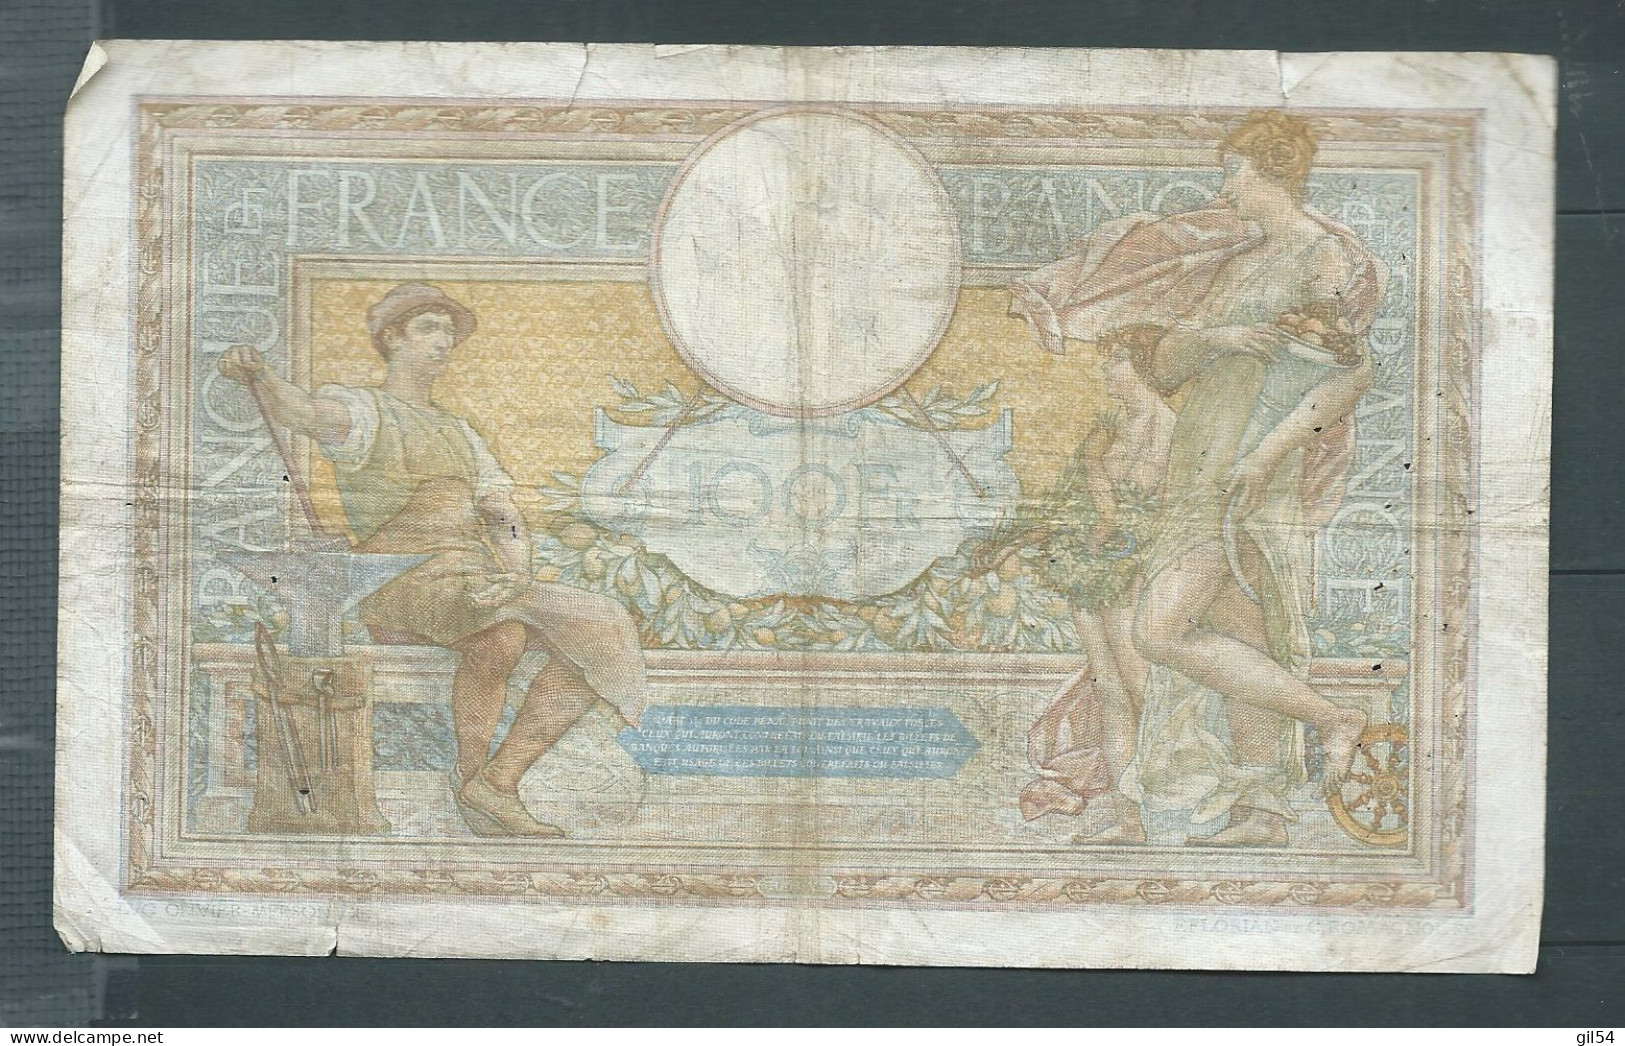 FRANCE * 100 Francs LUC OLIVIER MERSON  DA.8=9=1932.DA. --L.36853 019  --  Laura14330 - 100 F 1908-1939 ''Luc Olivier Merson''